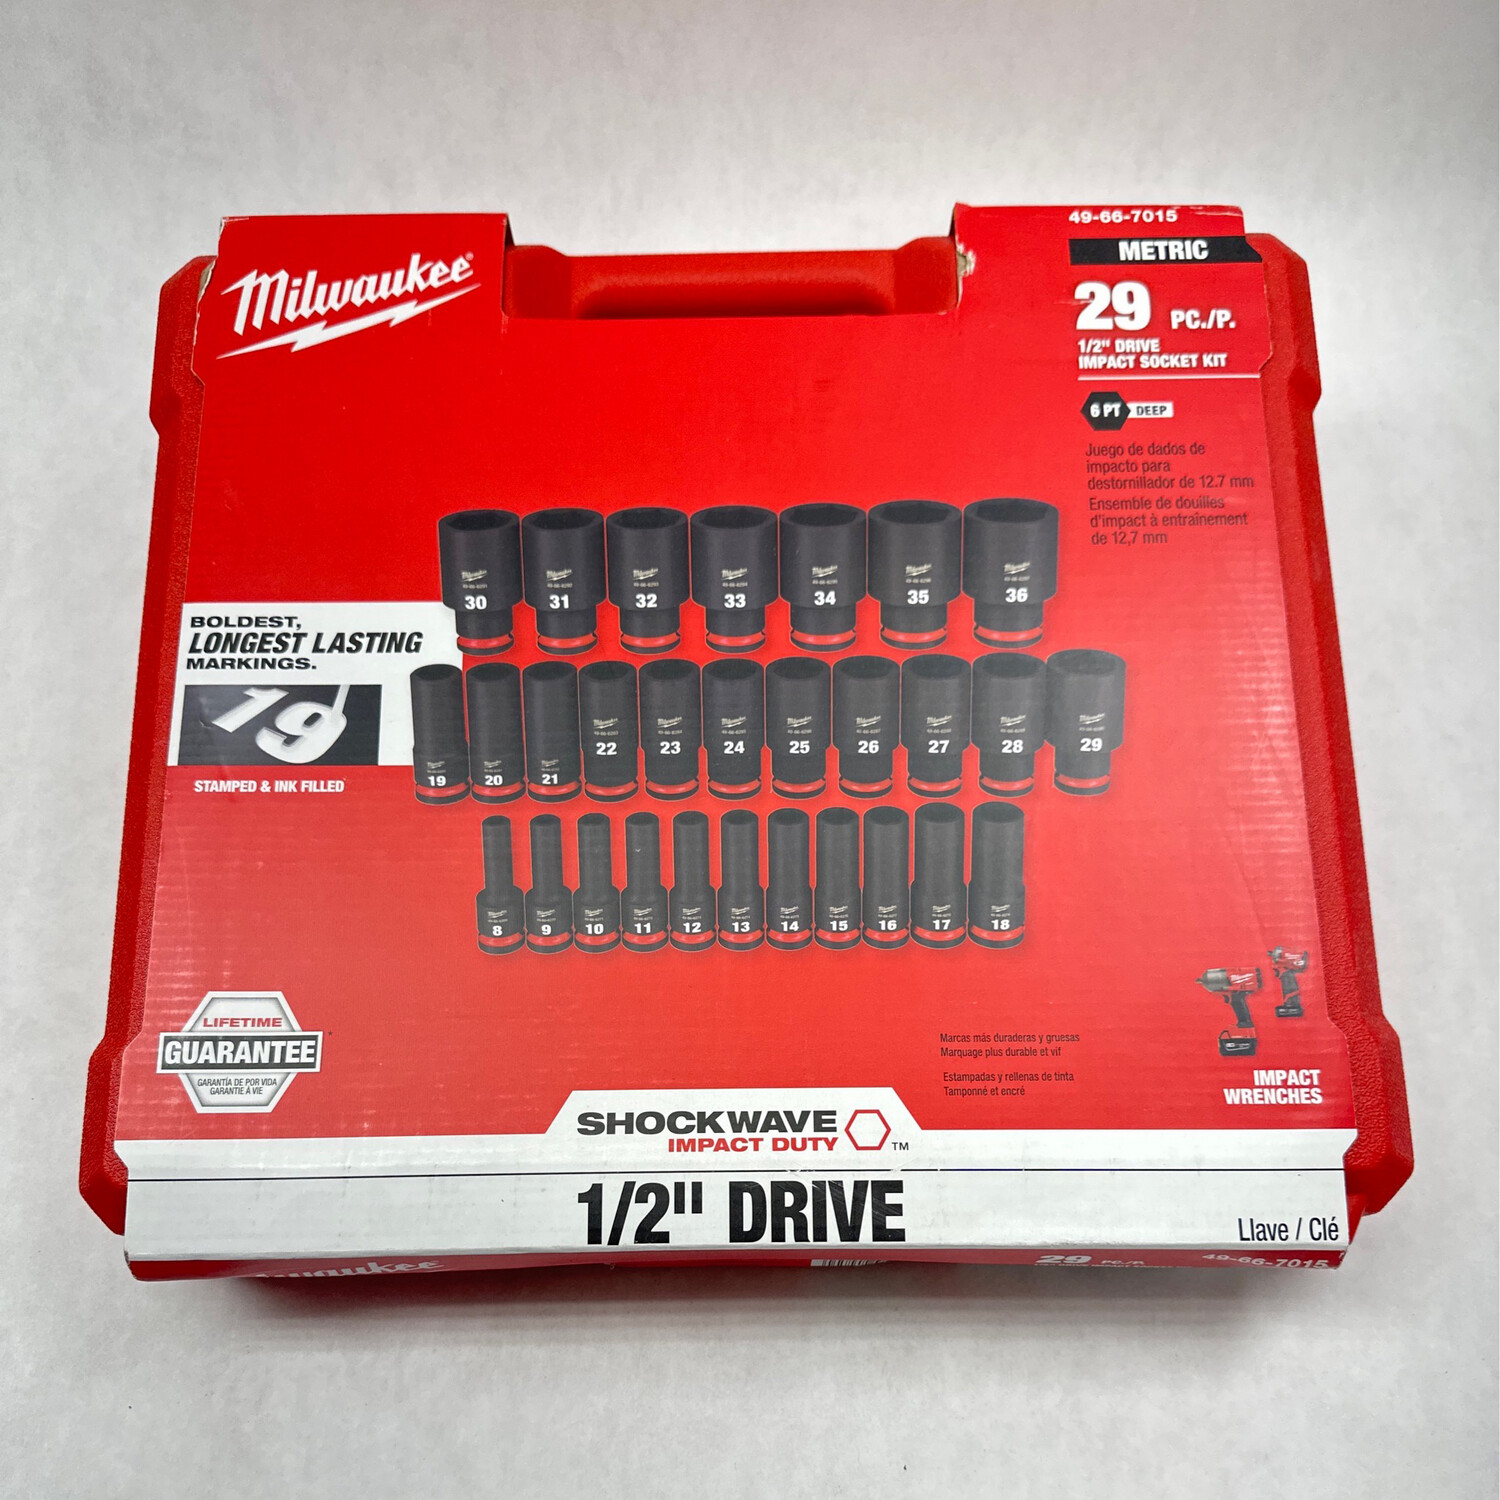 Milwaukee 29pc 1/2” Drive Metric Deep 6 Point Impact Socket Kit, 49-66-7015